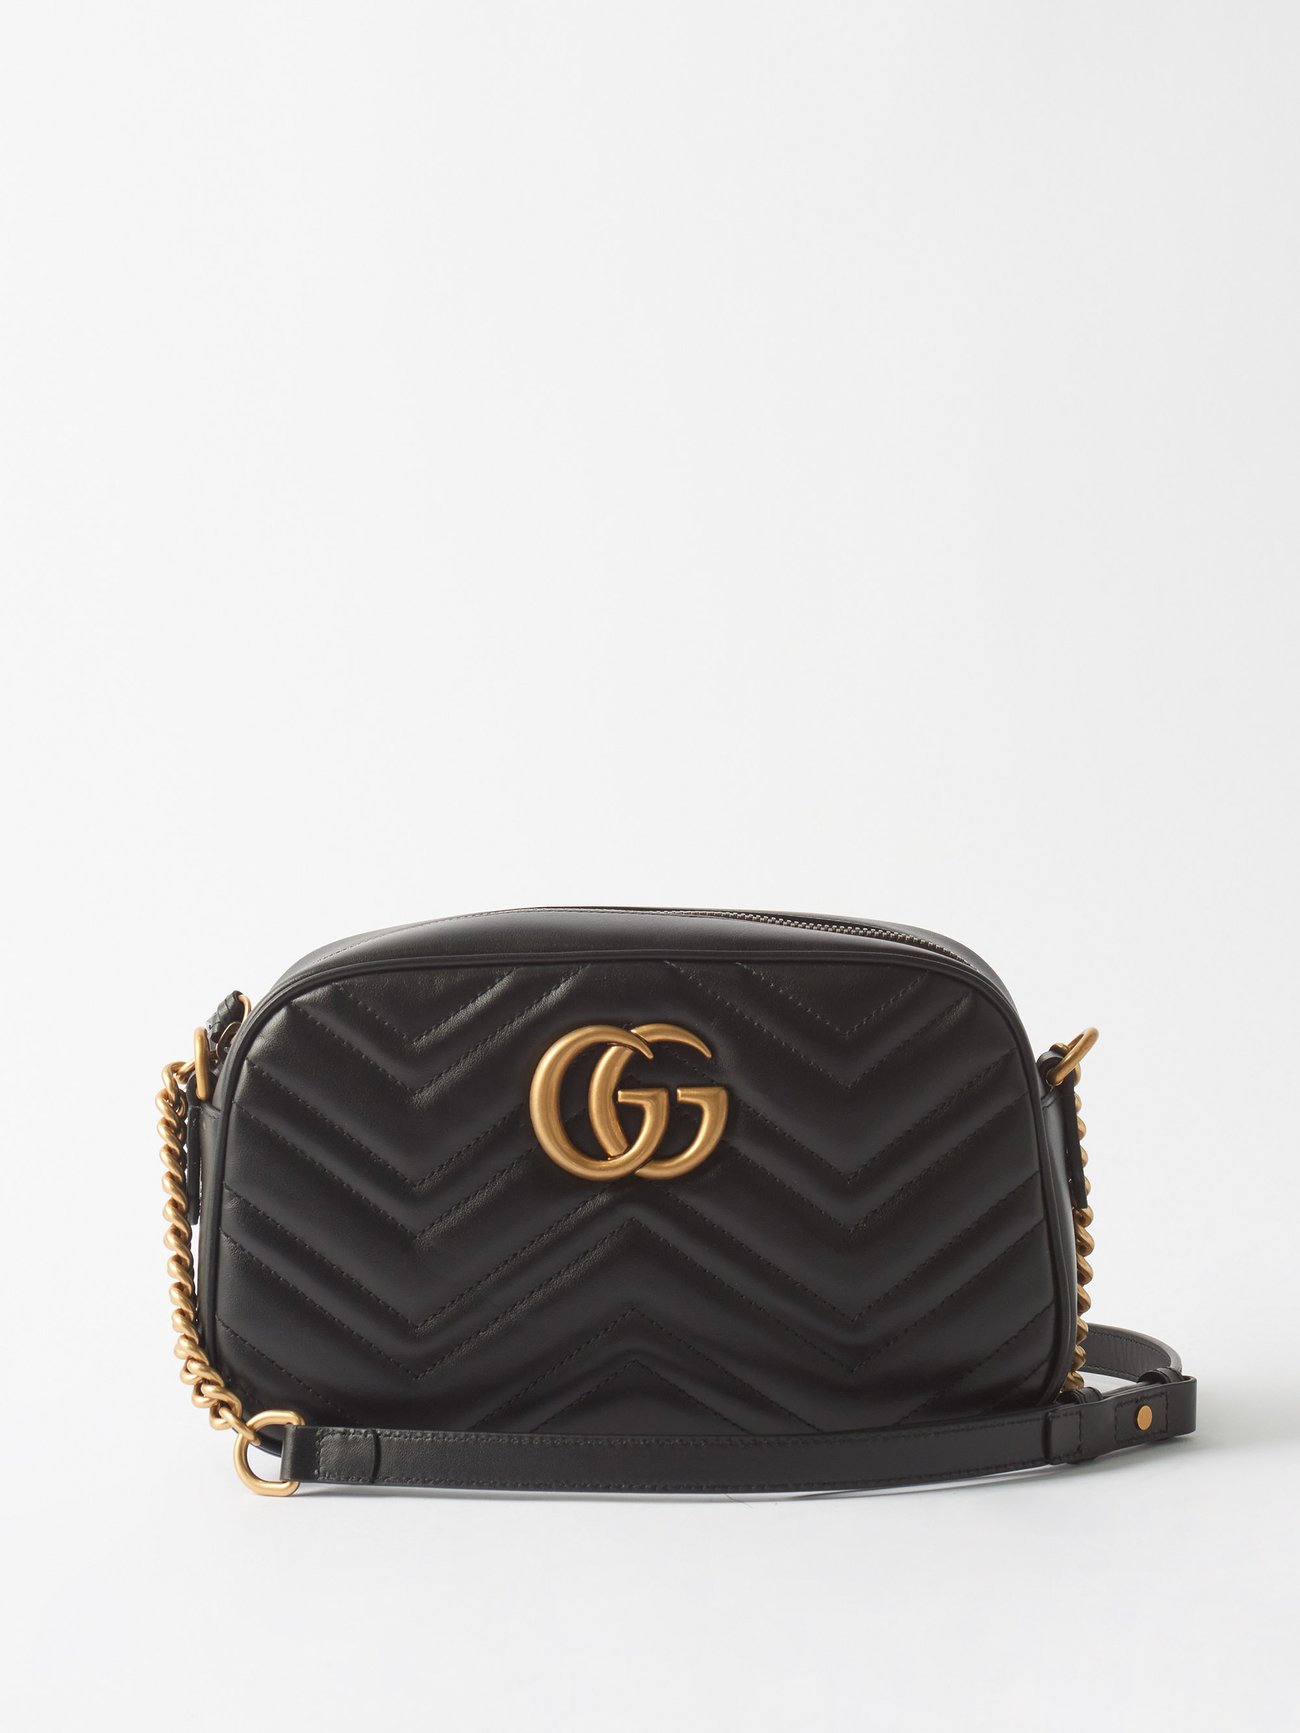 Aphrodite Small leather shoulder bag in black - Gucci | Mytheresa